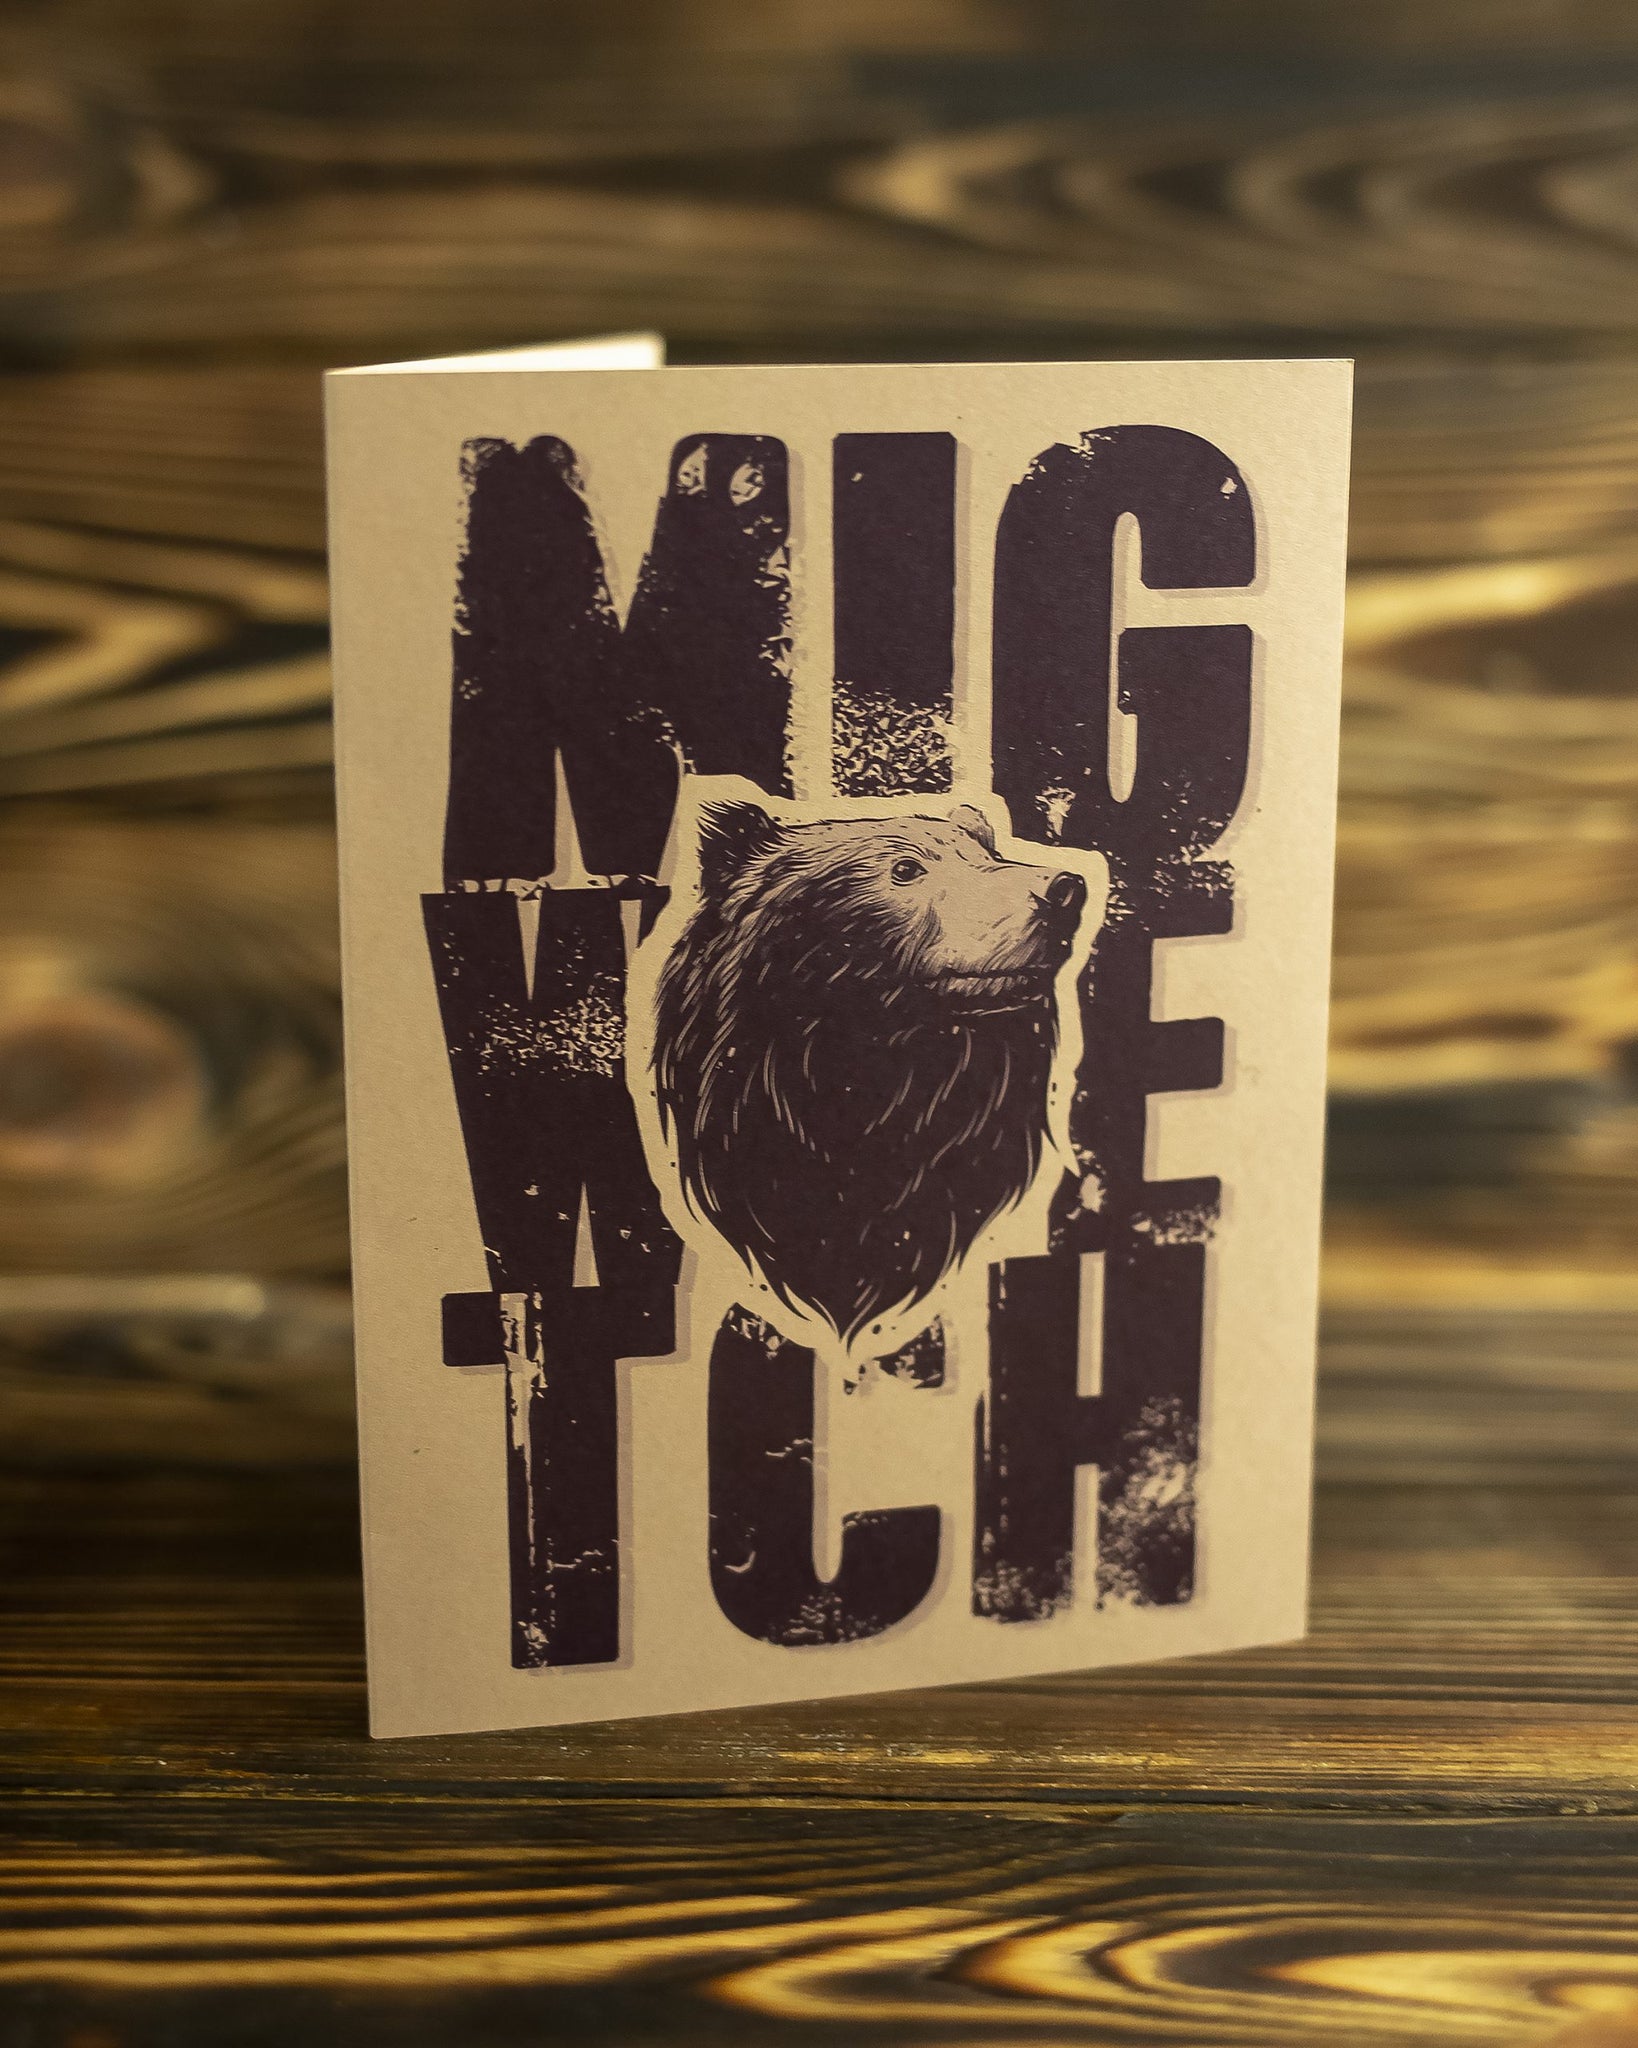 Migwetch (Thank You) Card - Mko (Bear)